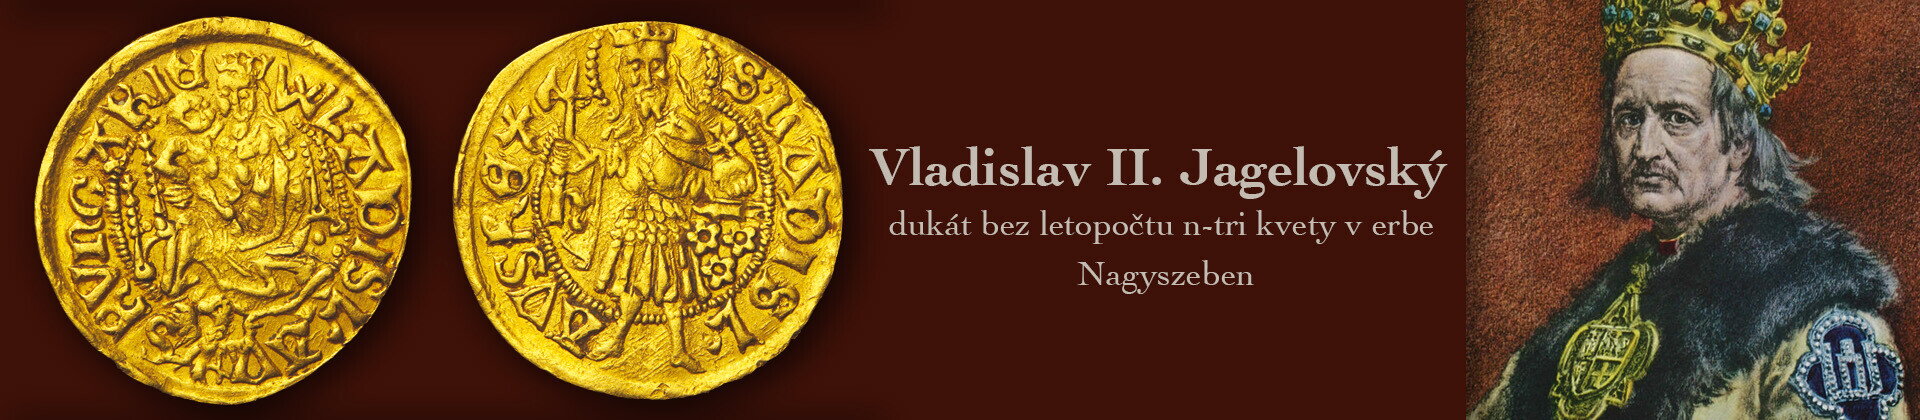 Vladislav II. Jagelovský - dukát Nagyszeben